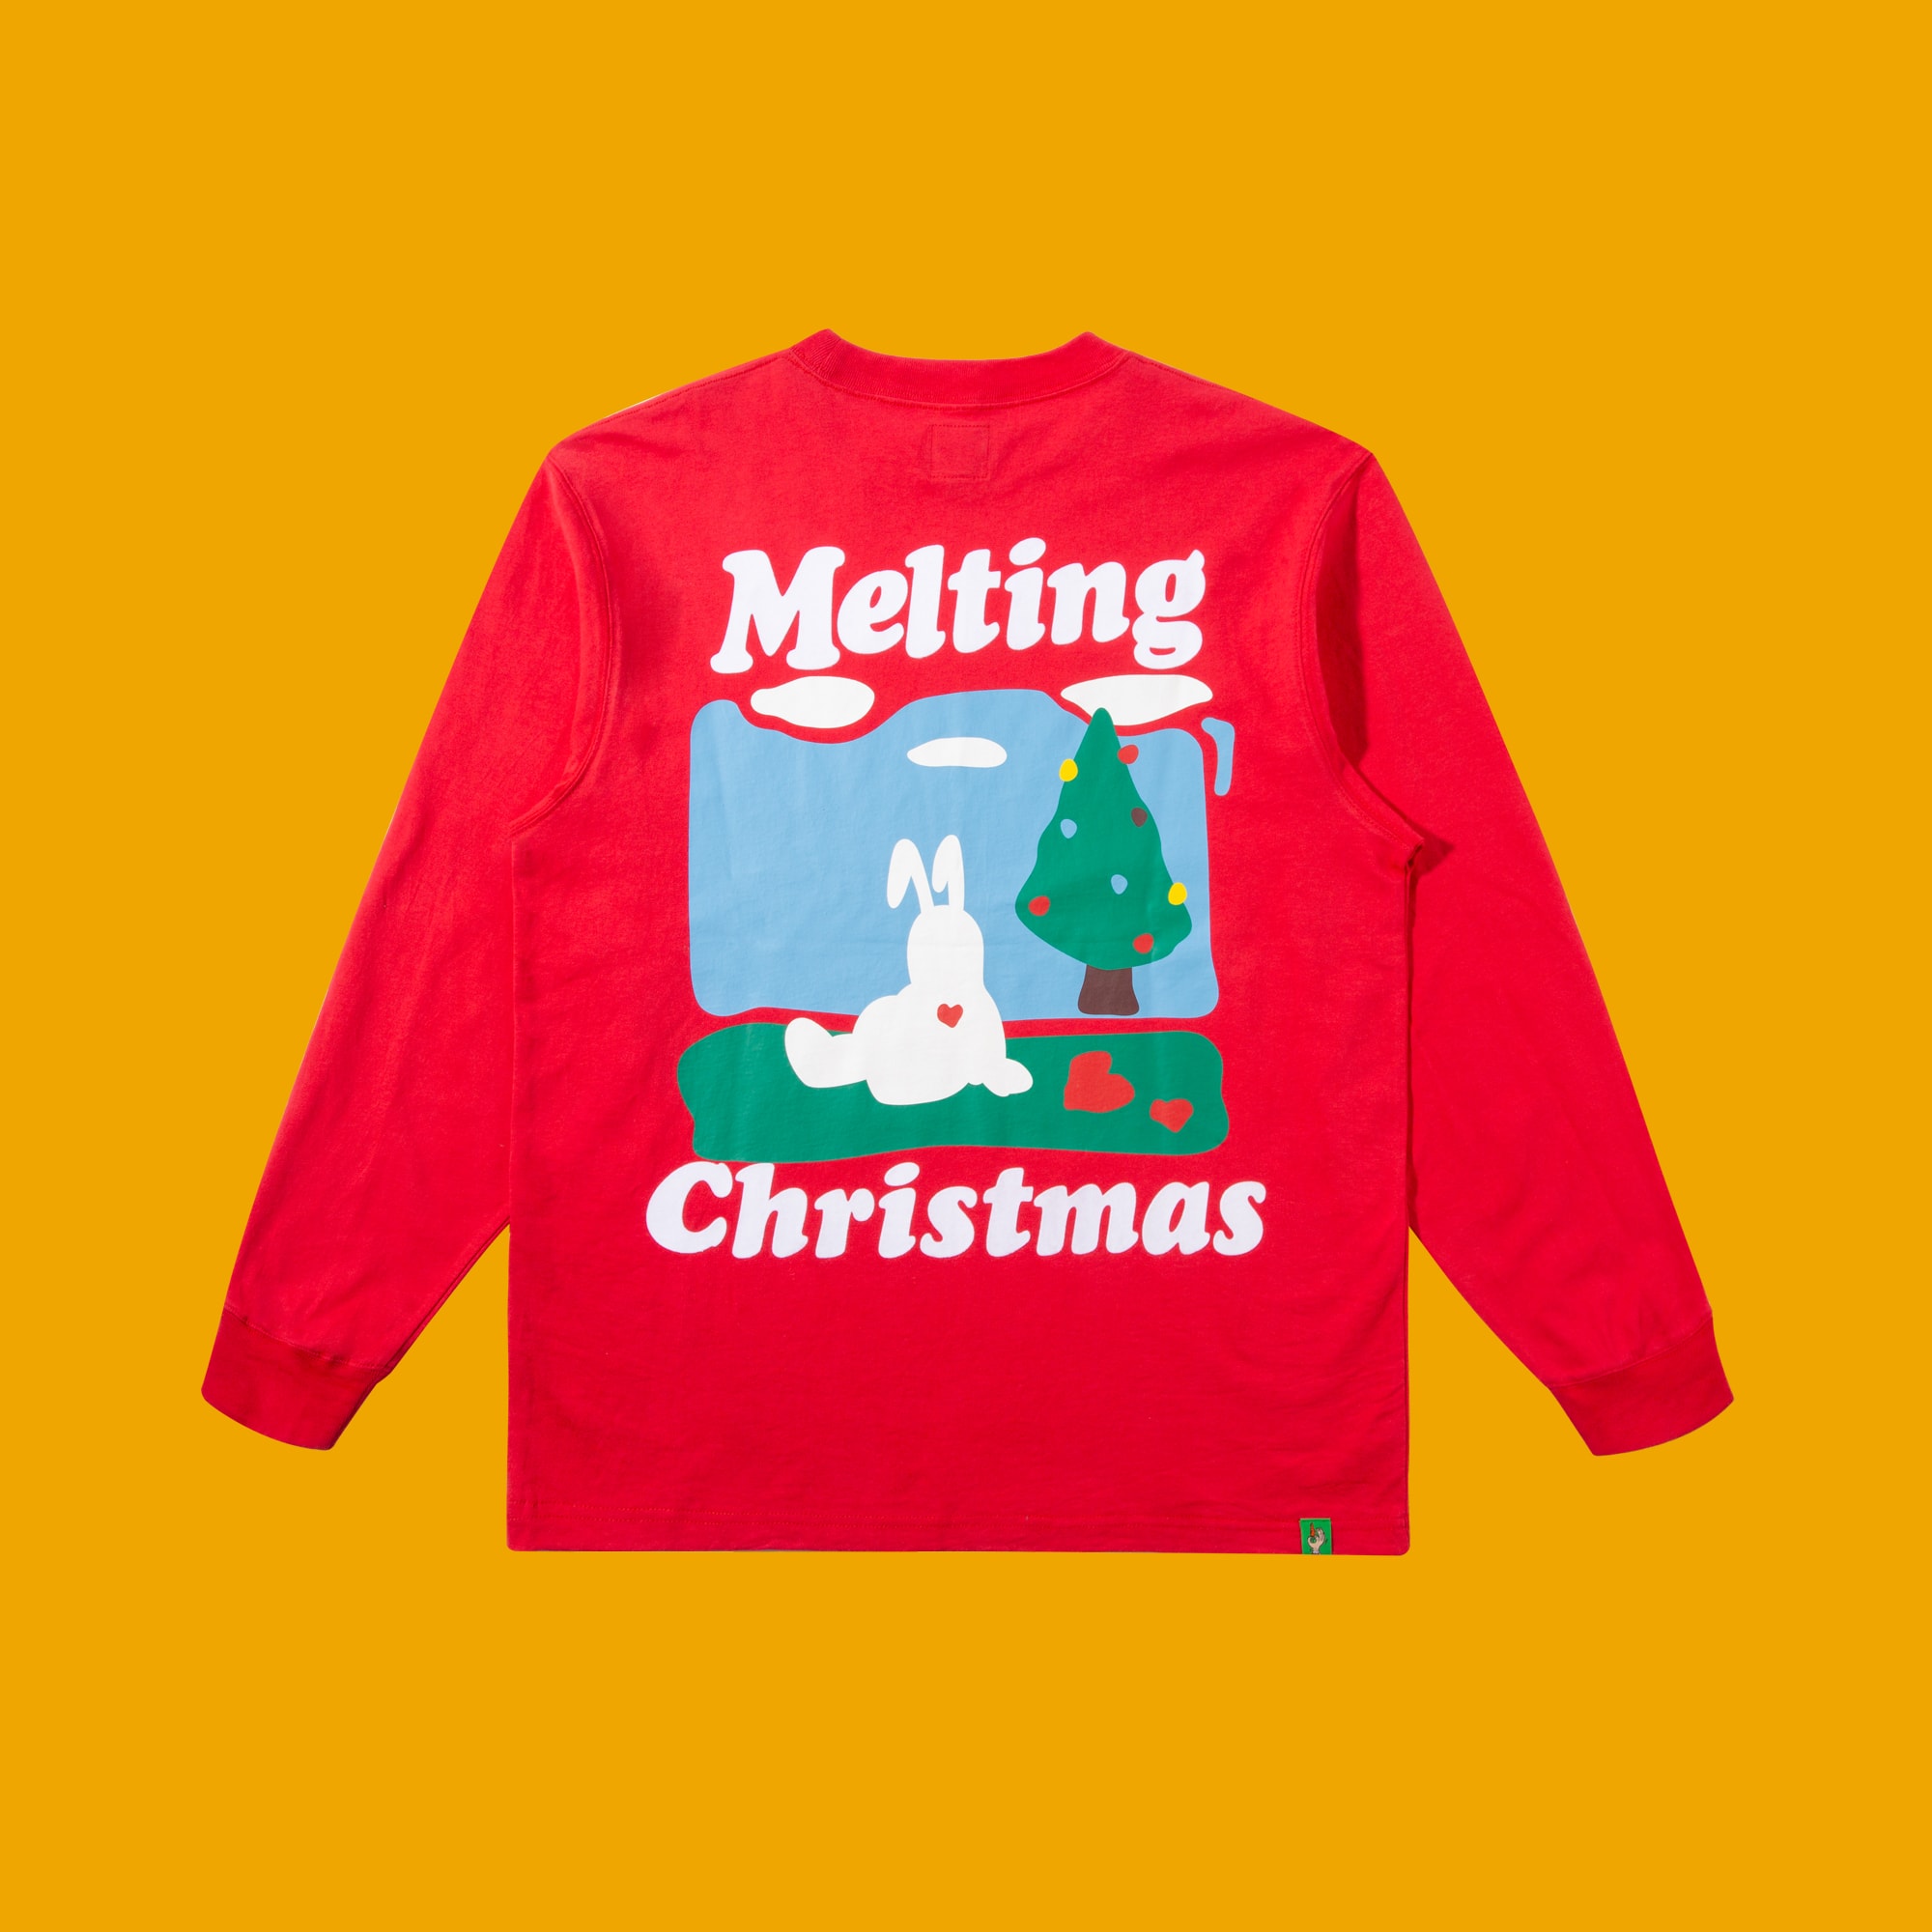 Melting Sadness 2019 圣诞限定系列「MELTING CHRISTMAS」登场